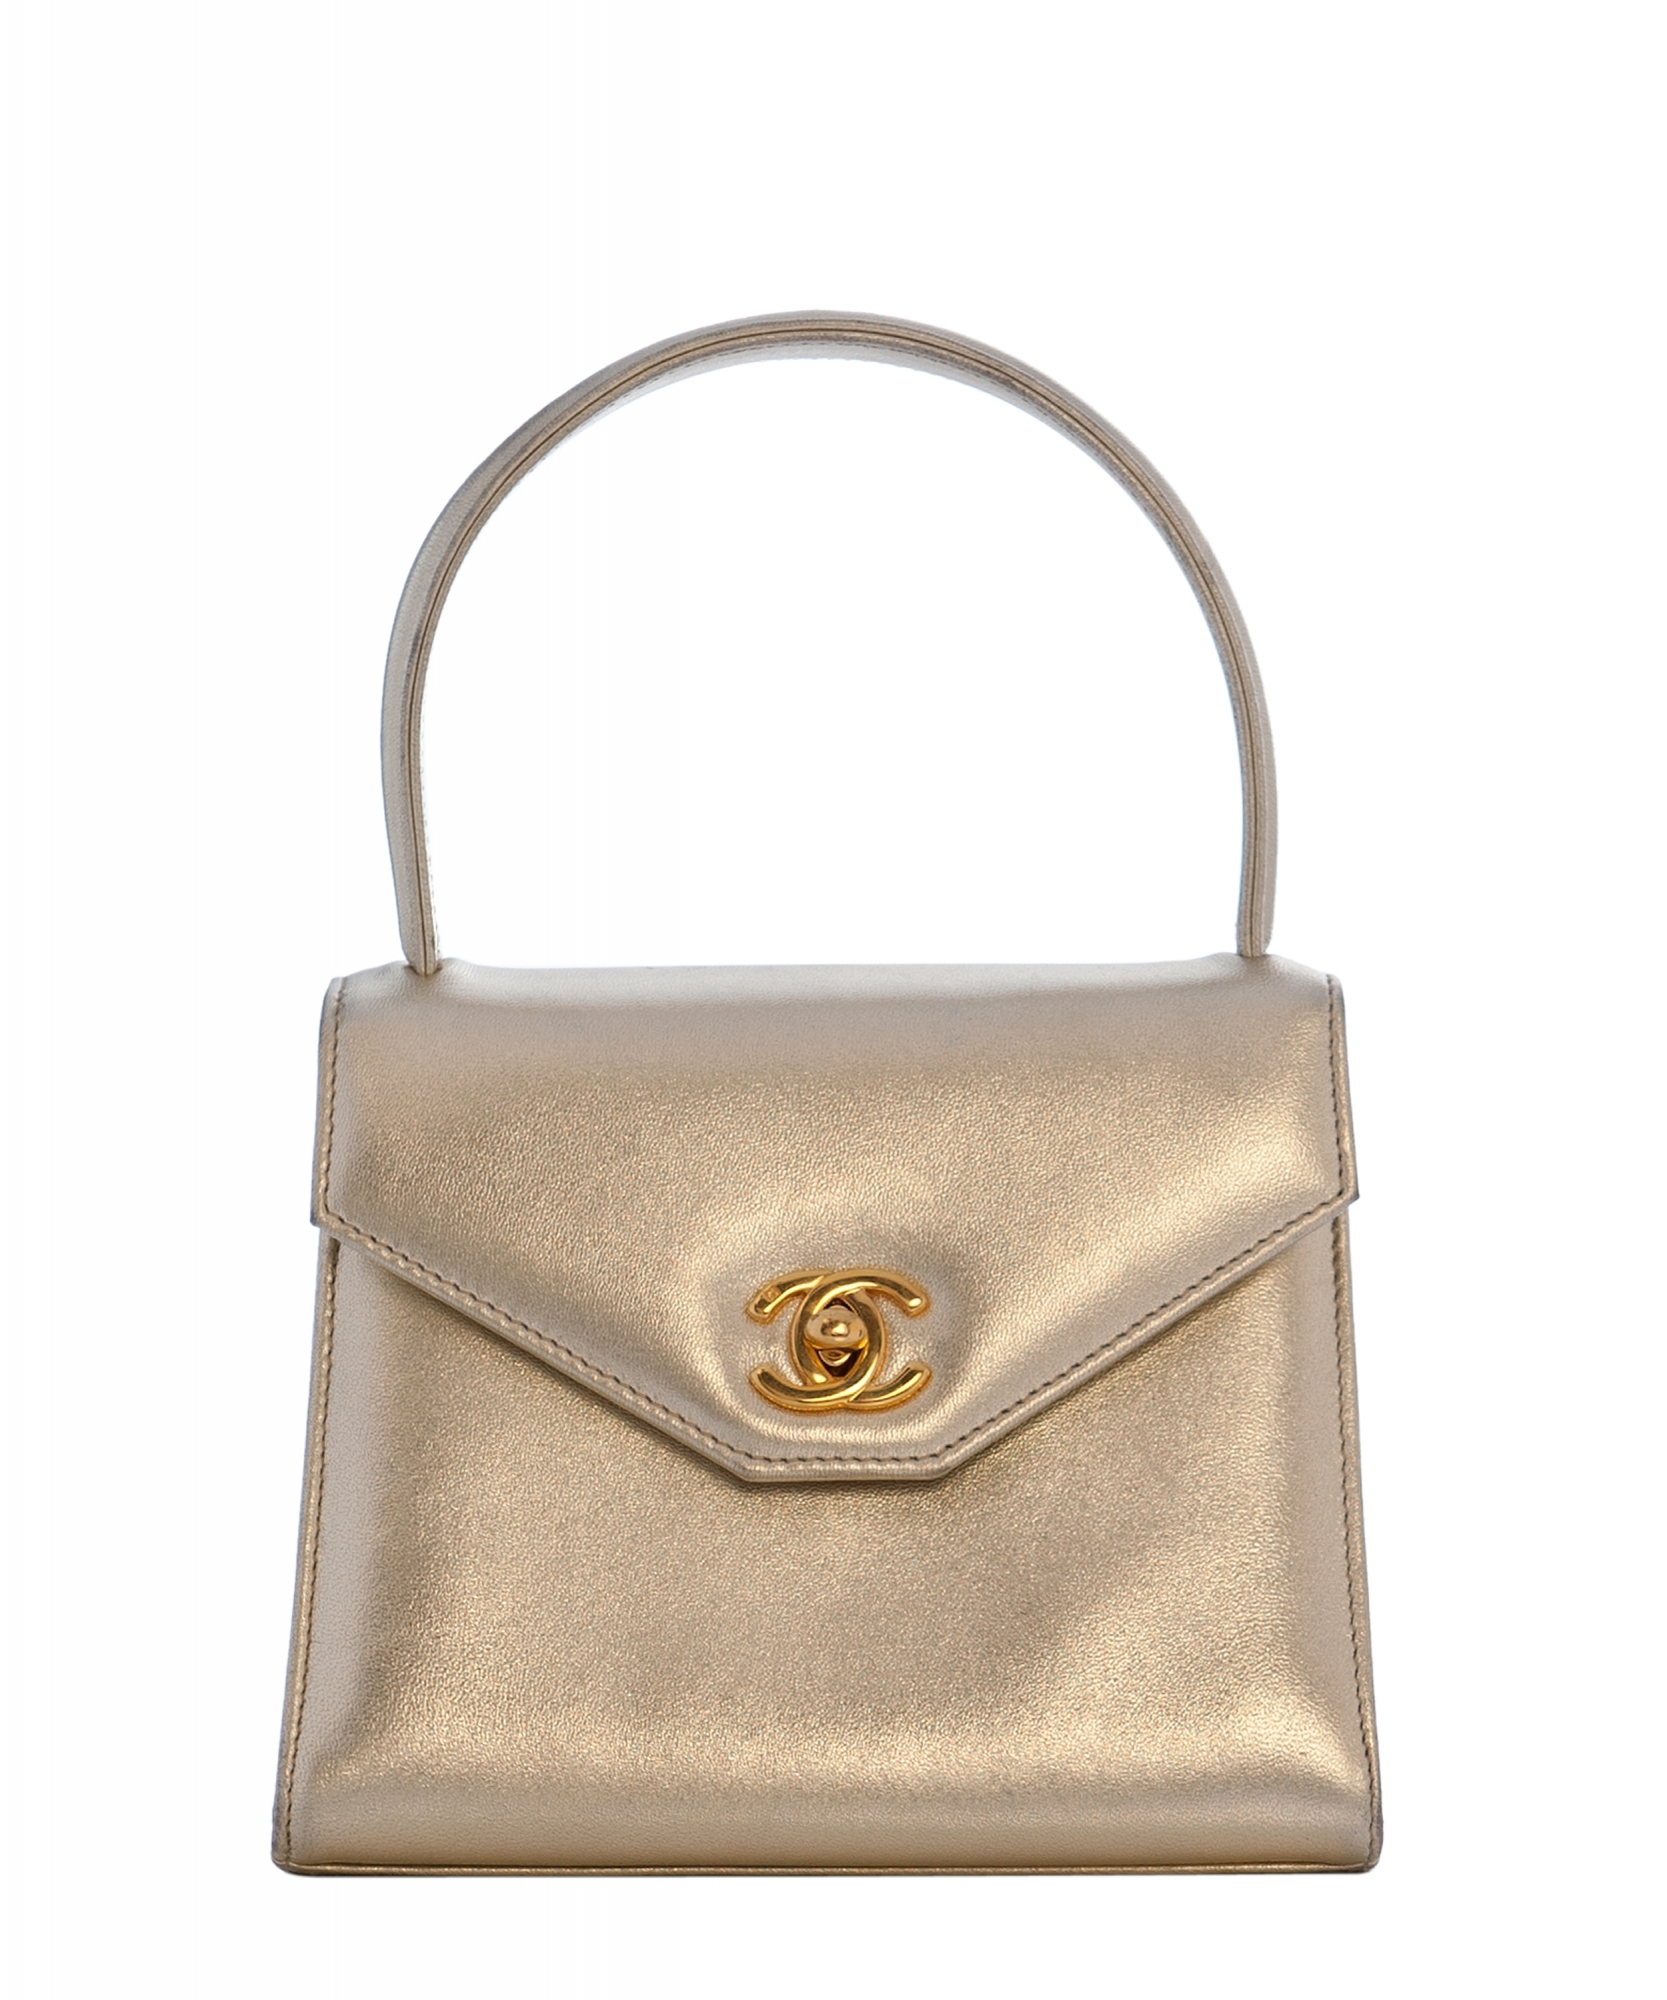 Chanel Metallic Gold Leather Mini Kelly Flap Bag Chanel La Doyenne